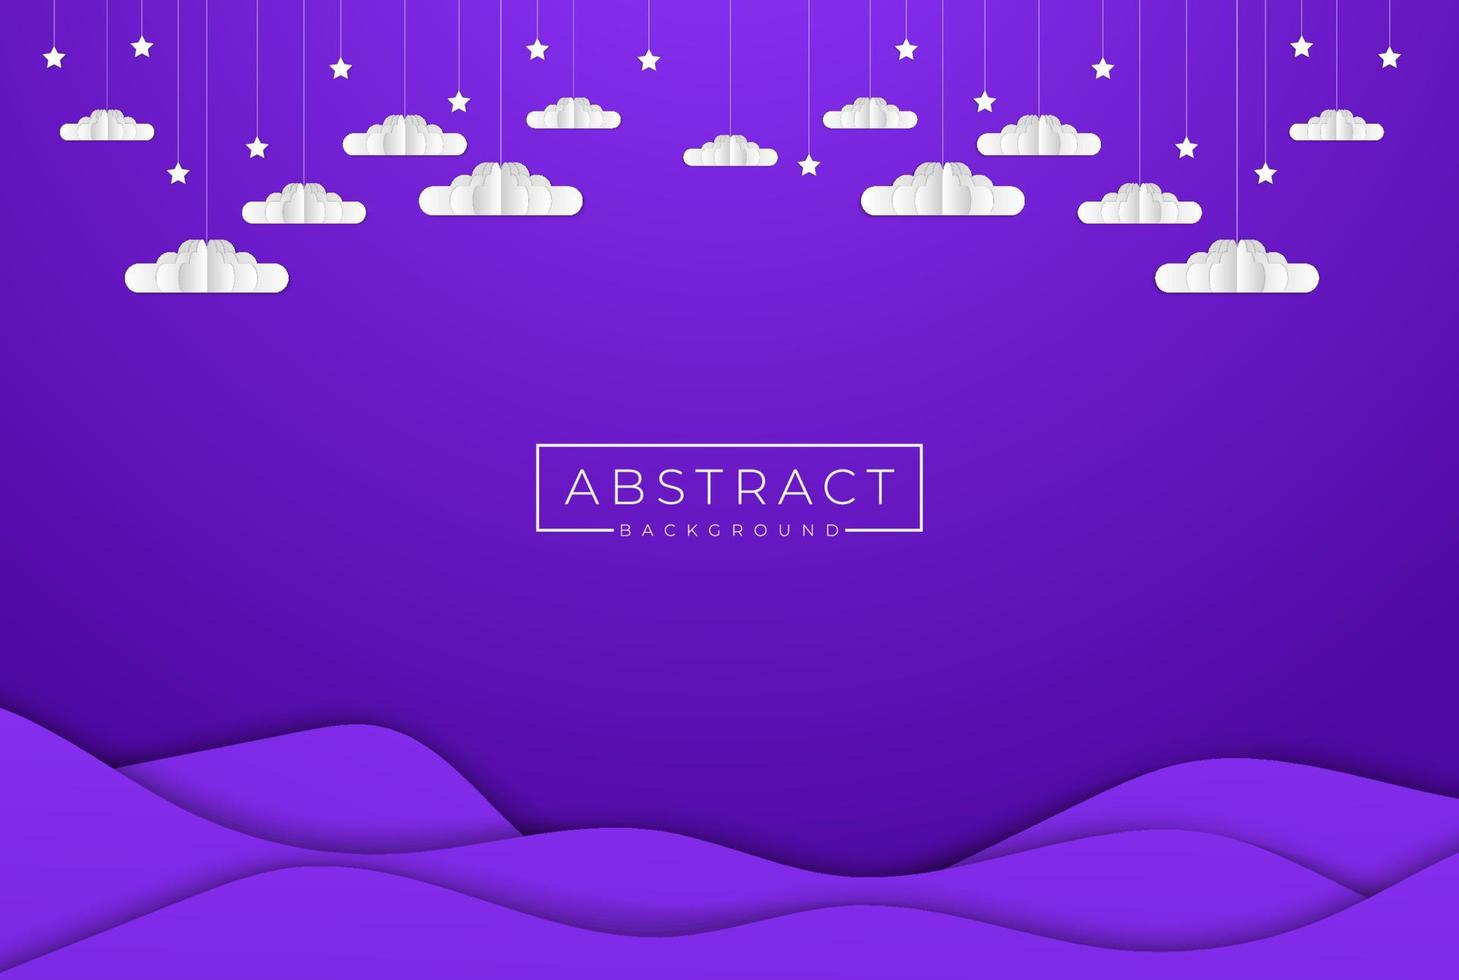 violette vloeibare lucht met papier gesneden wolken en sterrenachtergrond. vector illustratie